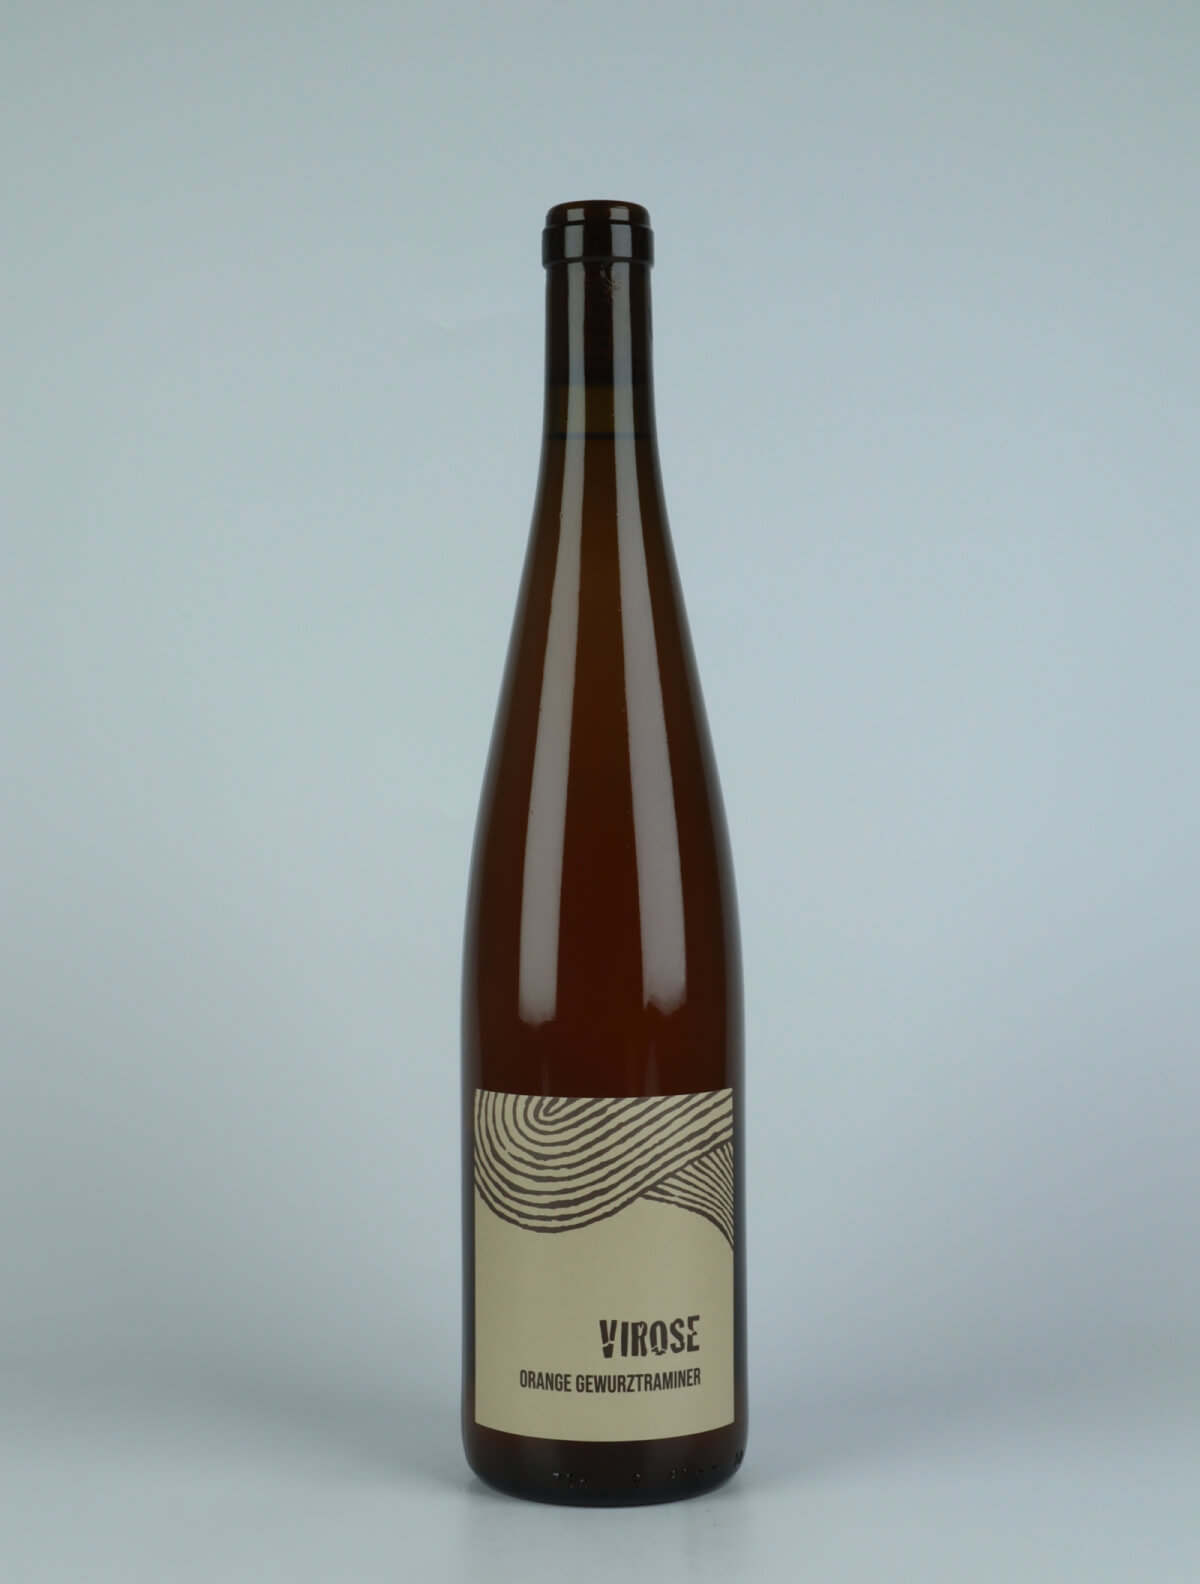 A bottle 2021 Virose Orange wine from Ruhlmann Dirringer, Alsace in France